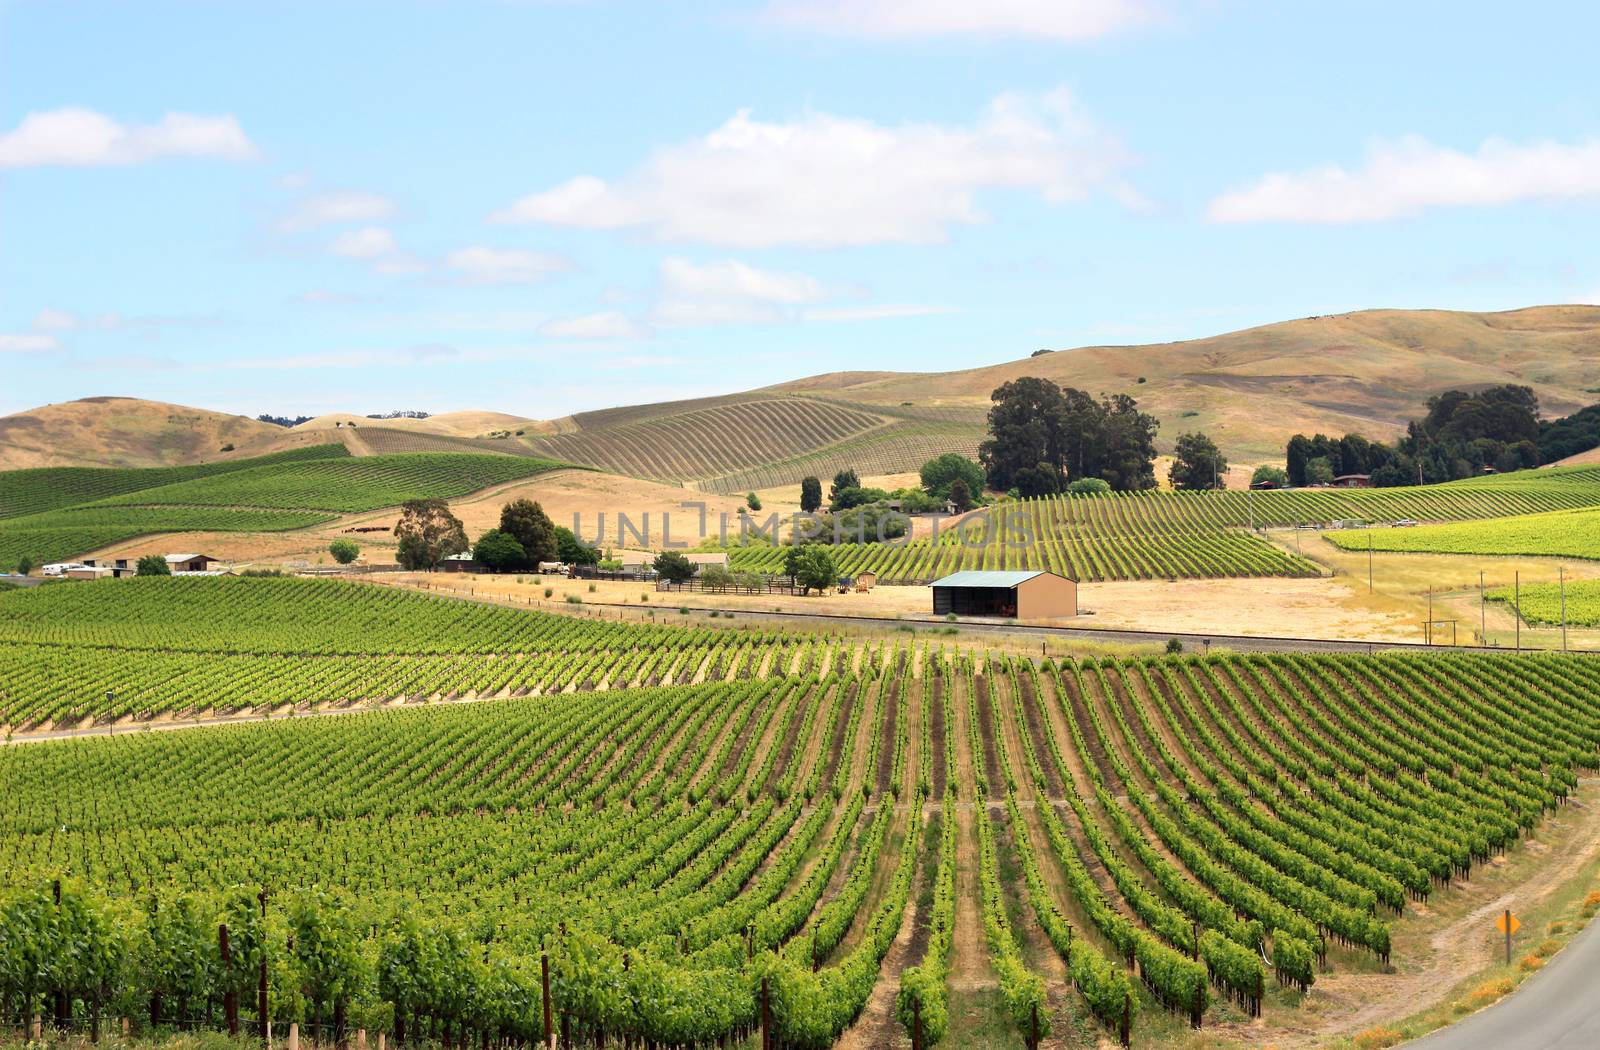 Scene of vineyard field in napa valley by ziss